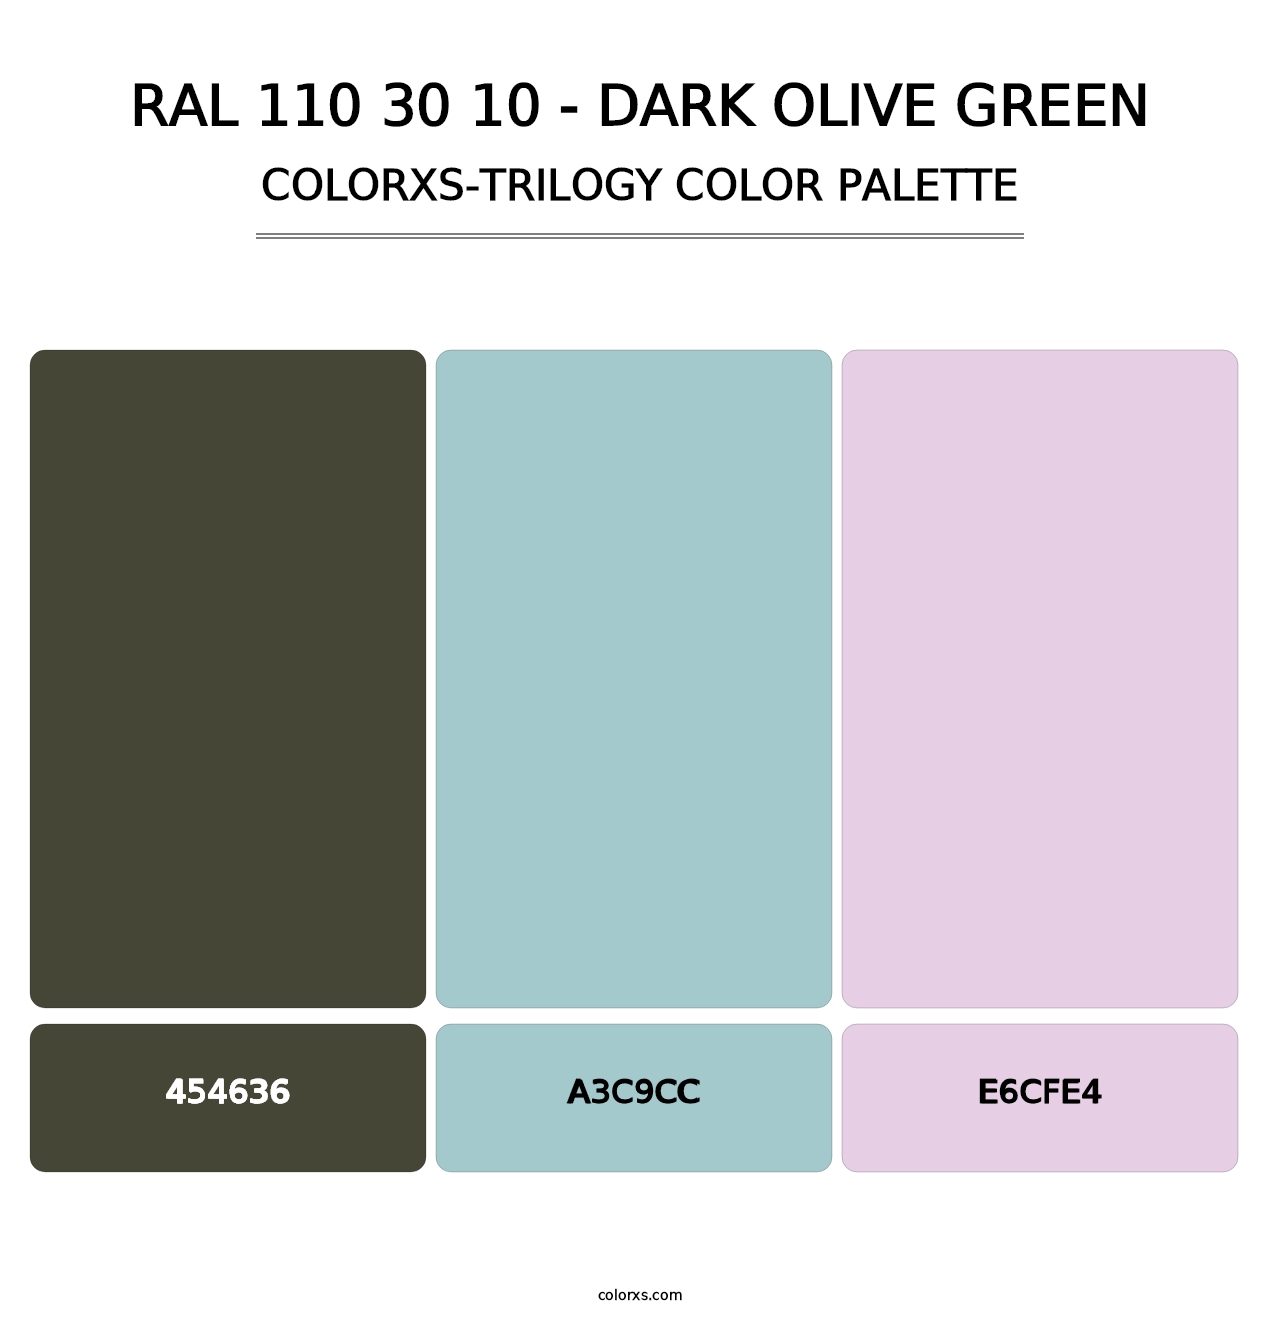 RAL 110 30 10 - Dark Olive Green - Colorxs Trilogy Palette